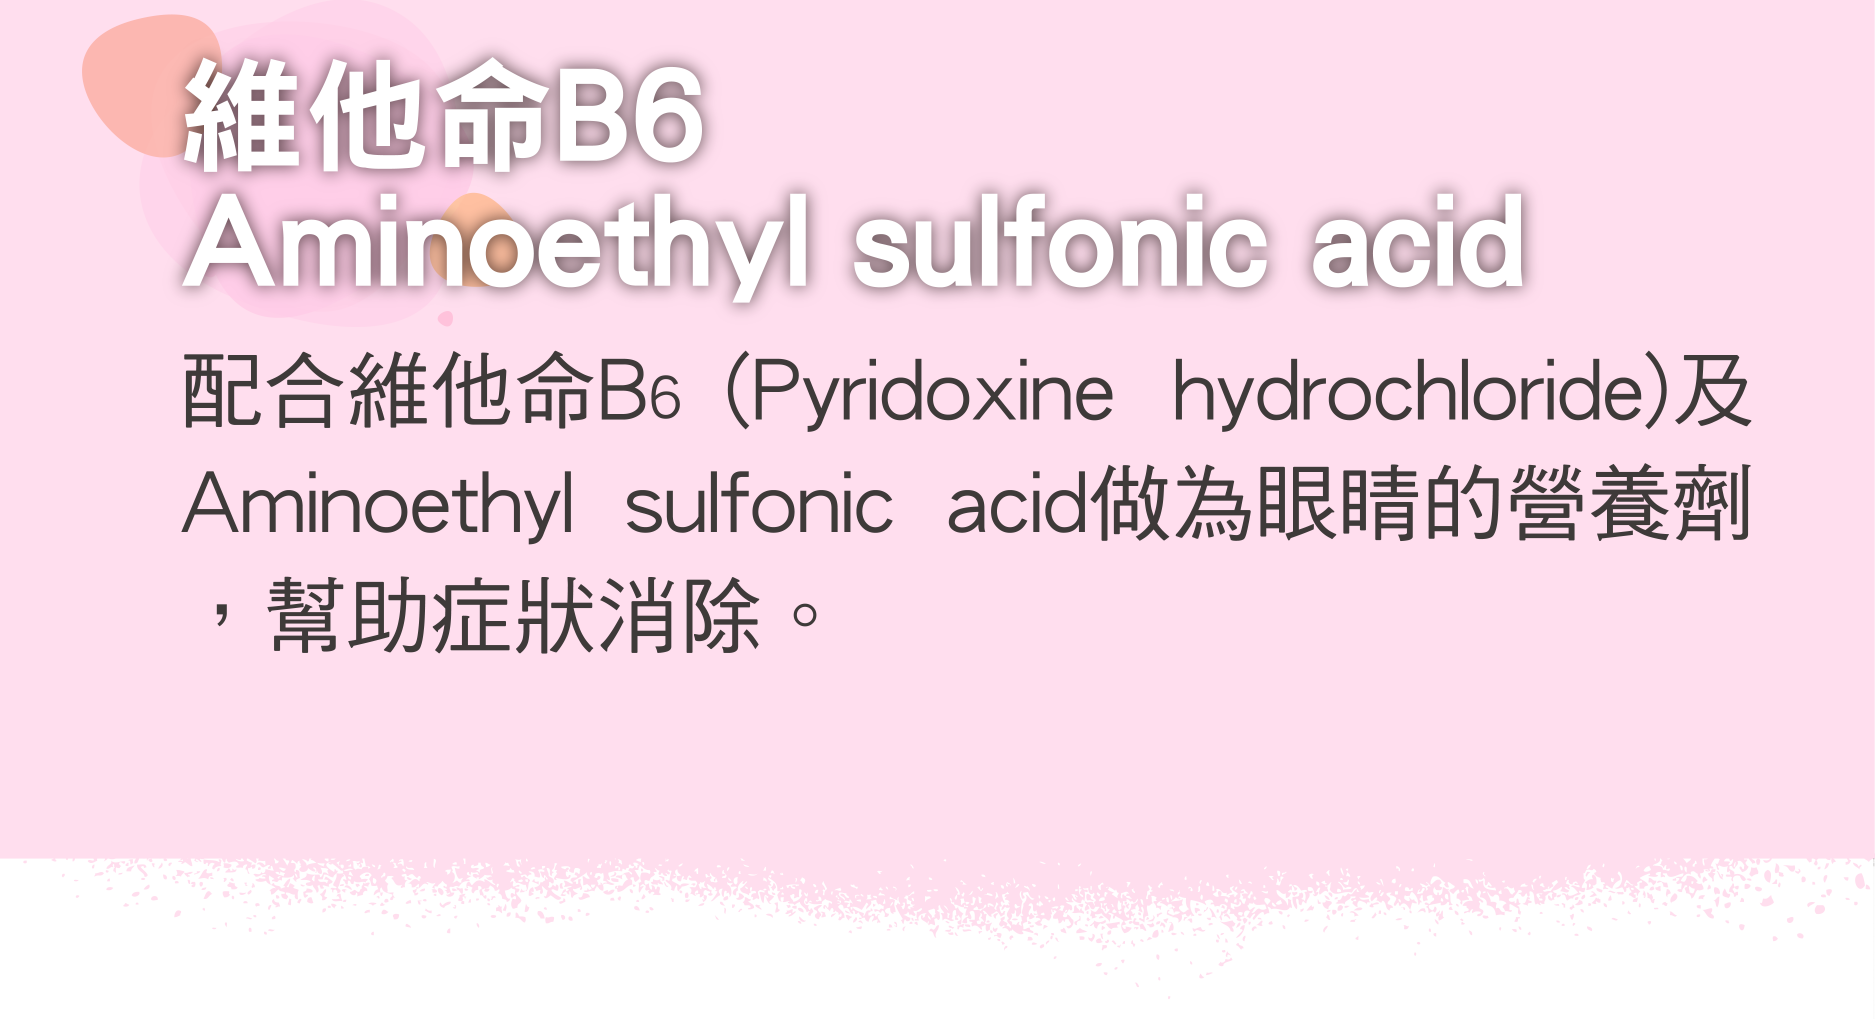 維他命B6 Aminoethyl sulfonic acid 配合維他命B6 (Pyridoxine hydrochloride)及Aminoethyl sulfonic acid做為眼睛的營養劑，幫助症狀消除。